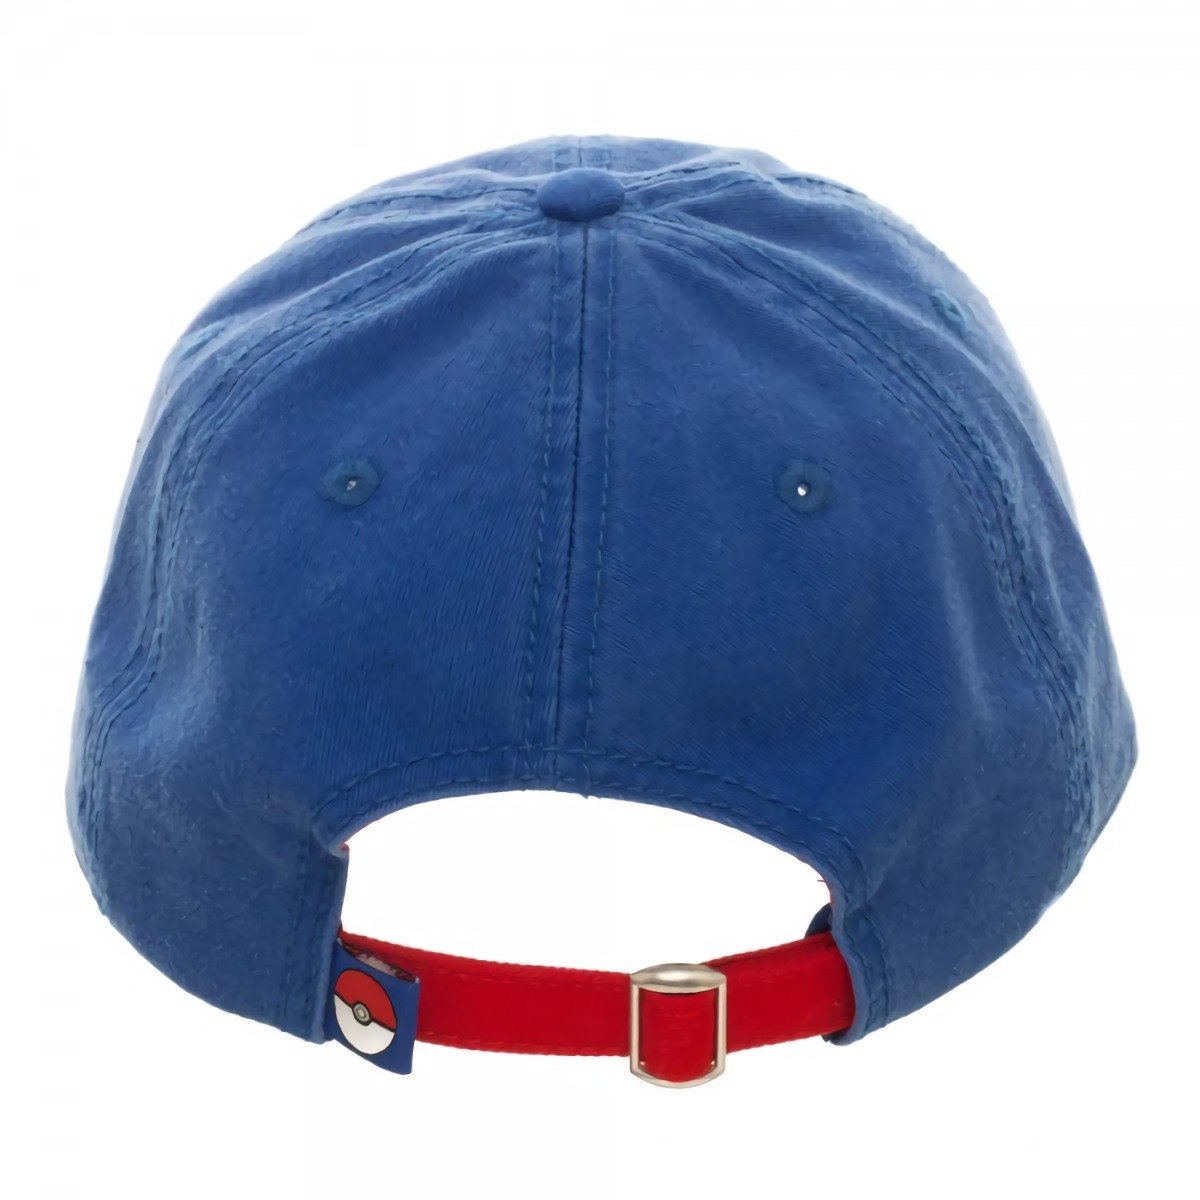 Pokémon XY Blue Adjustable Dad Snapback Cap Hat